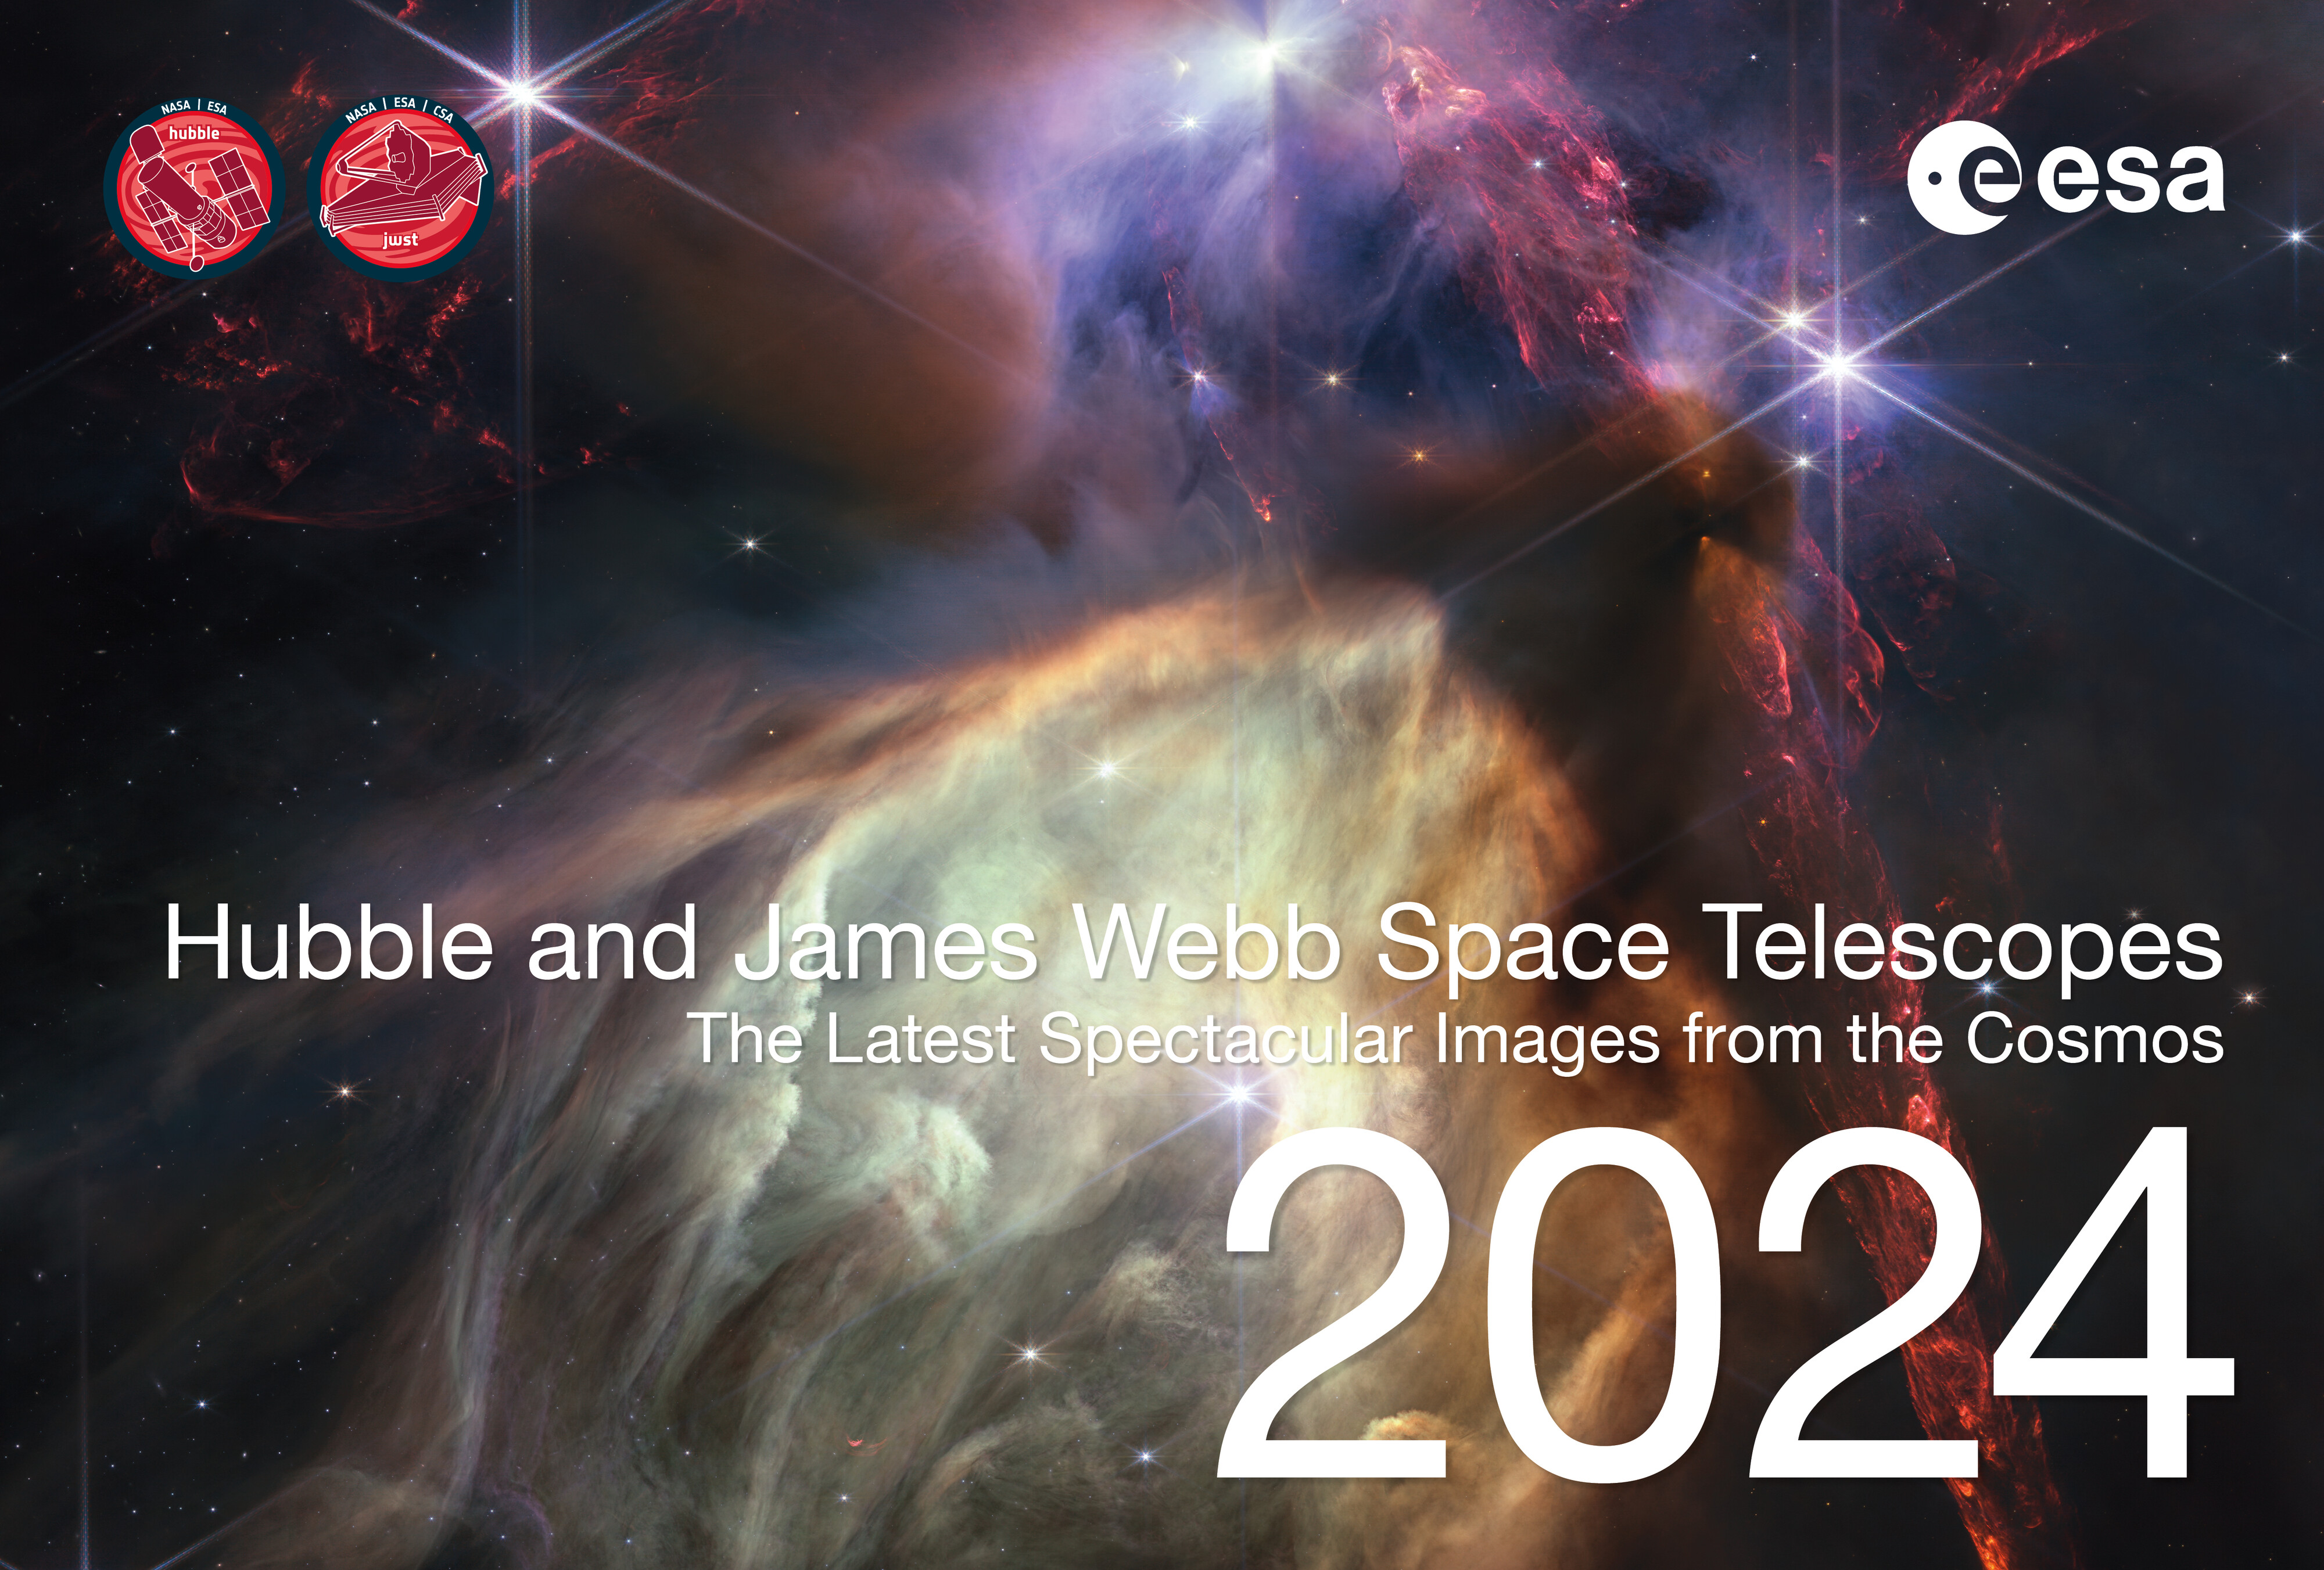 Friends of NASA Download Free 2024 Hubble and Webb Calendar European